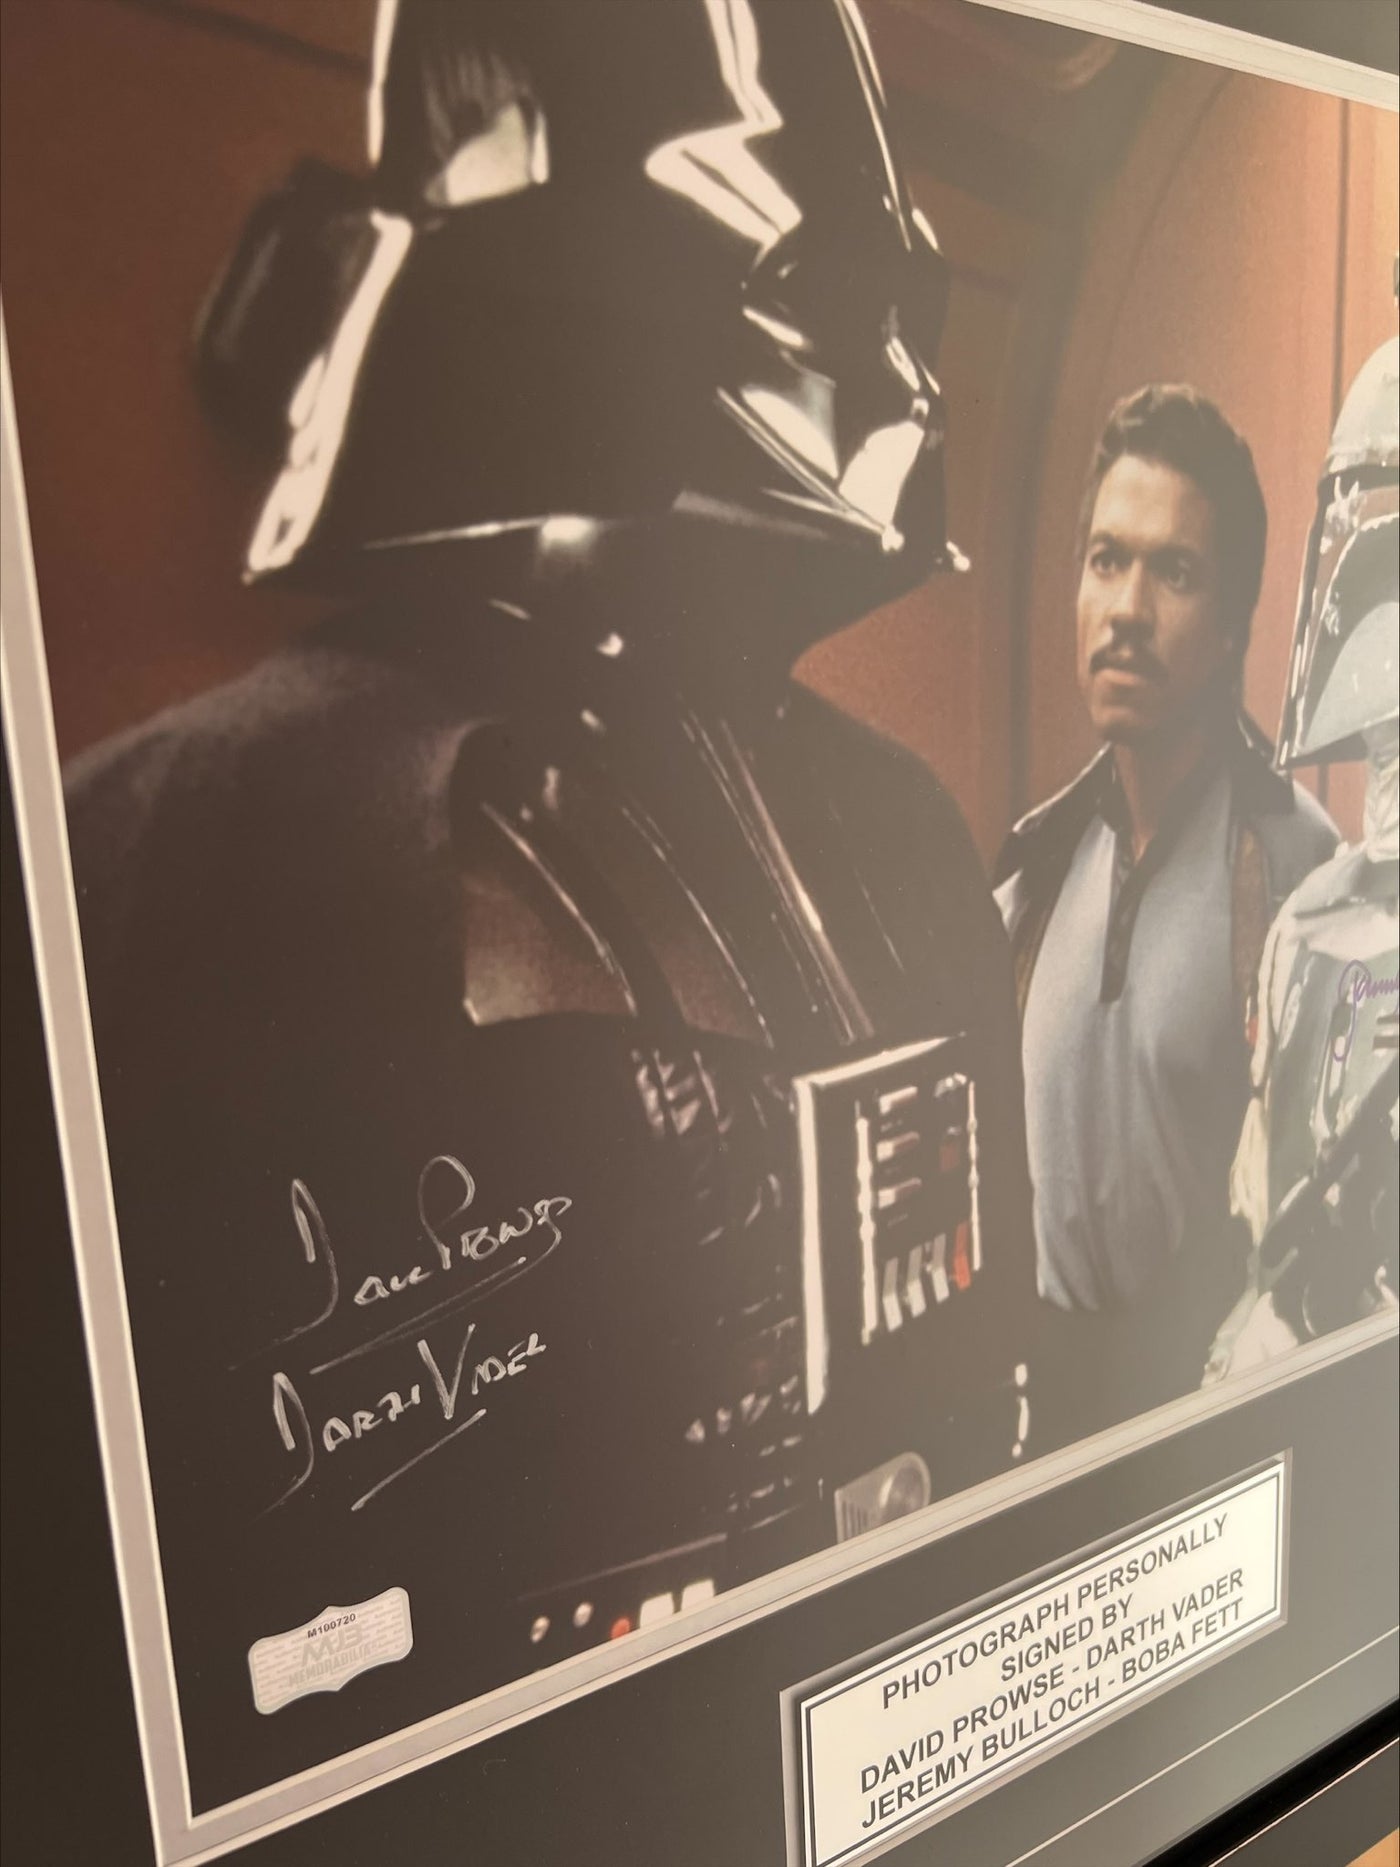 David Prowse Jeremy Bulloch Signed Star Wars Inscribed Darth Vader Boba Fett Beckett Authentication